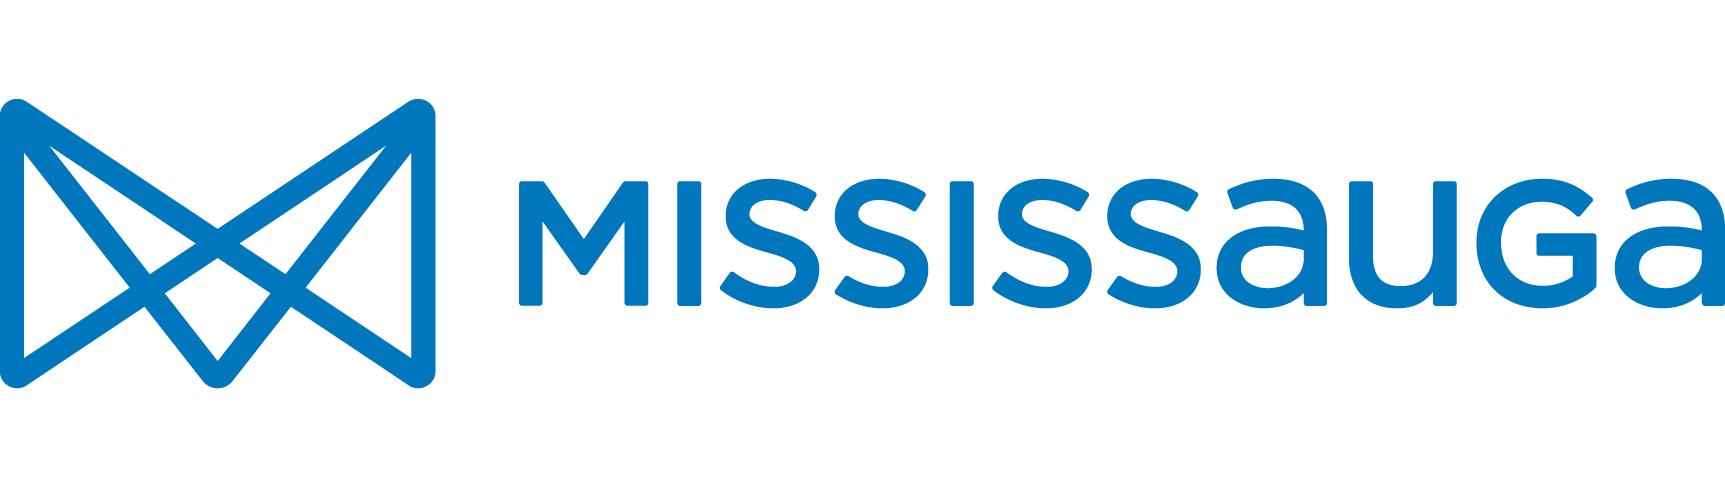 Mississauga logo